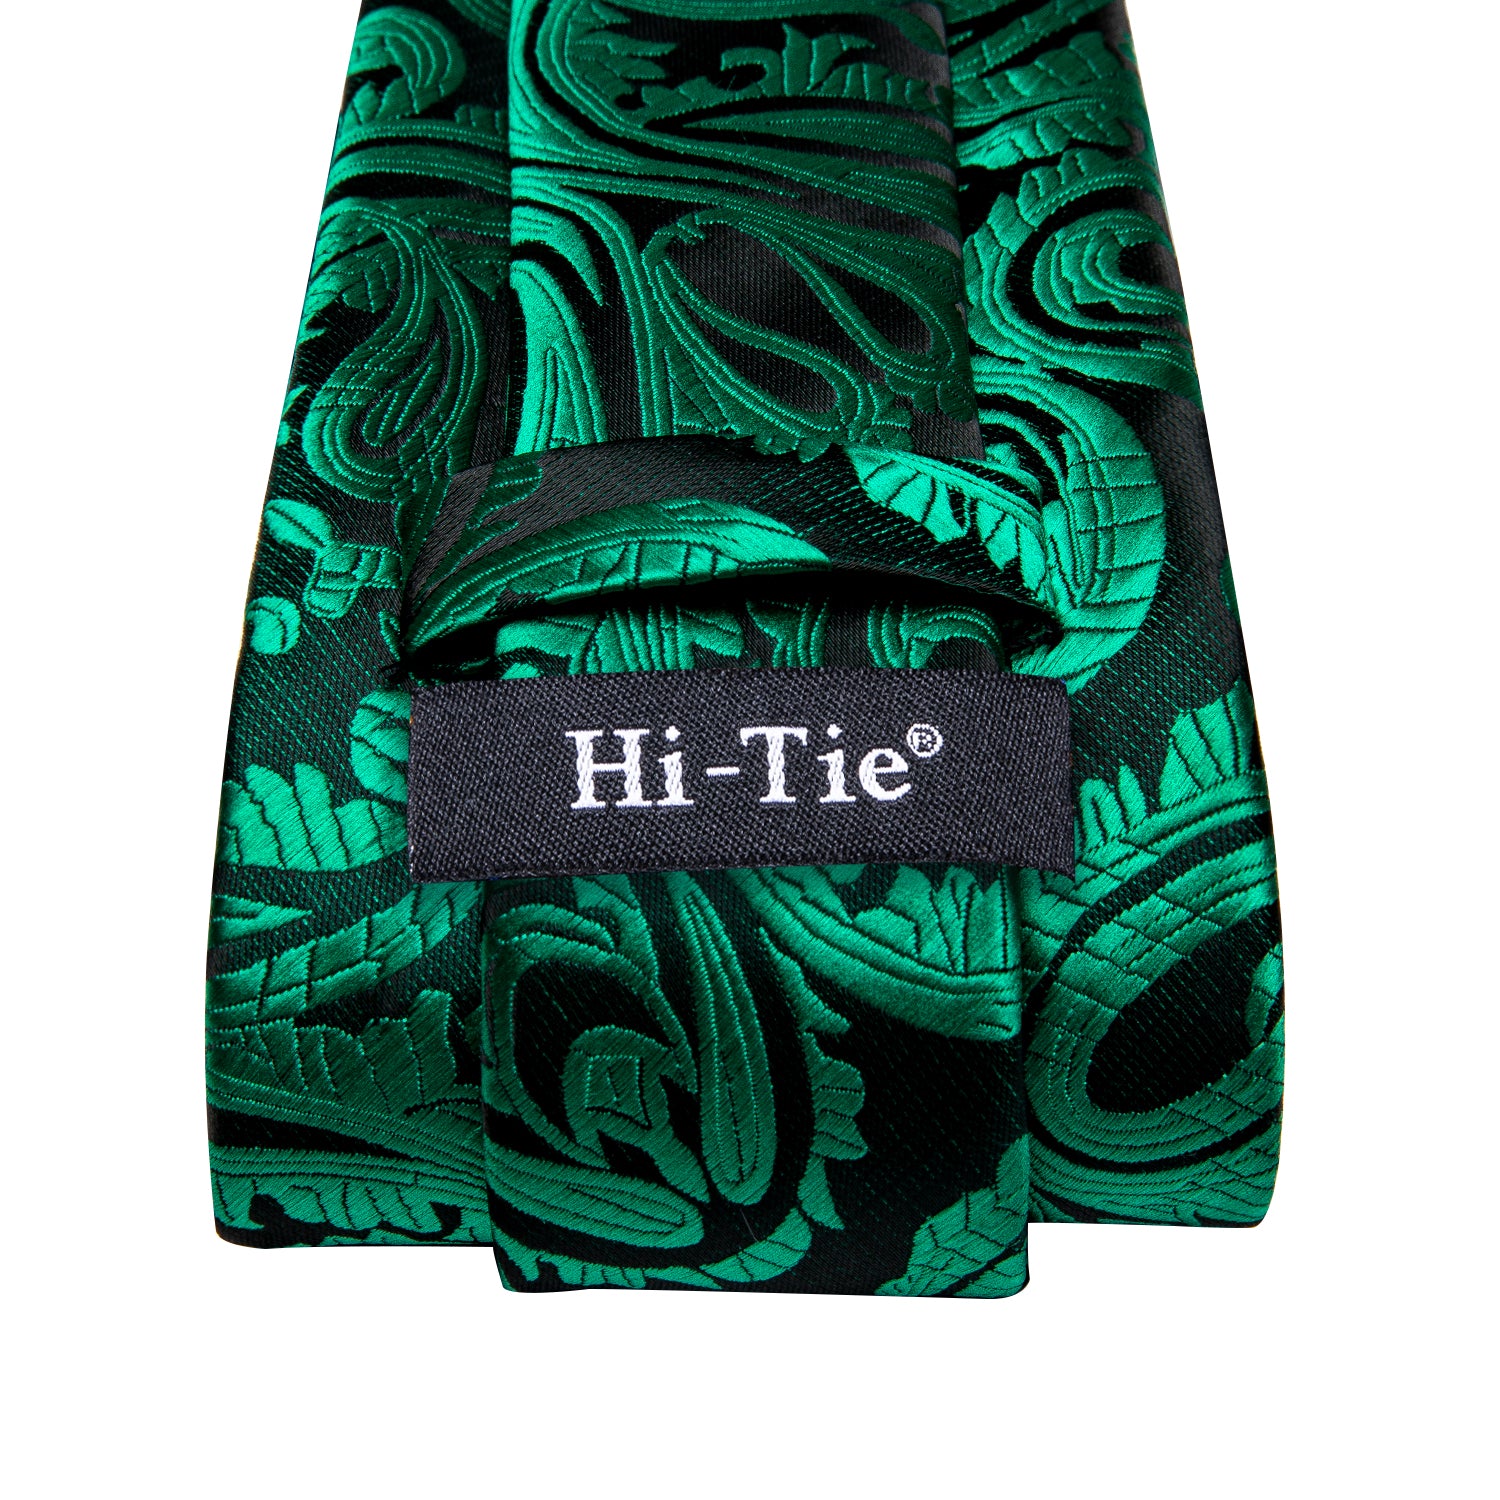 Green Black Paisley Tie Pocket Square Cufflinks Set